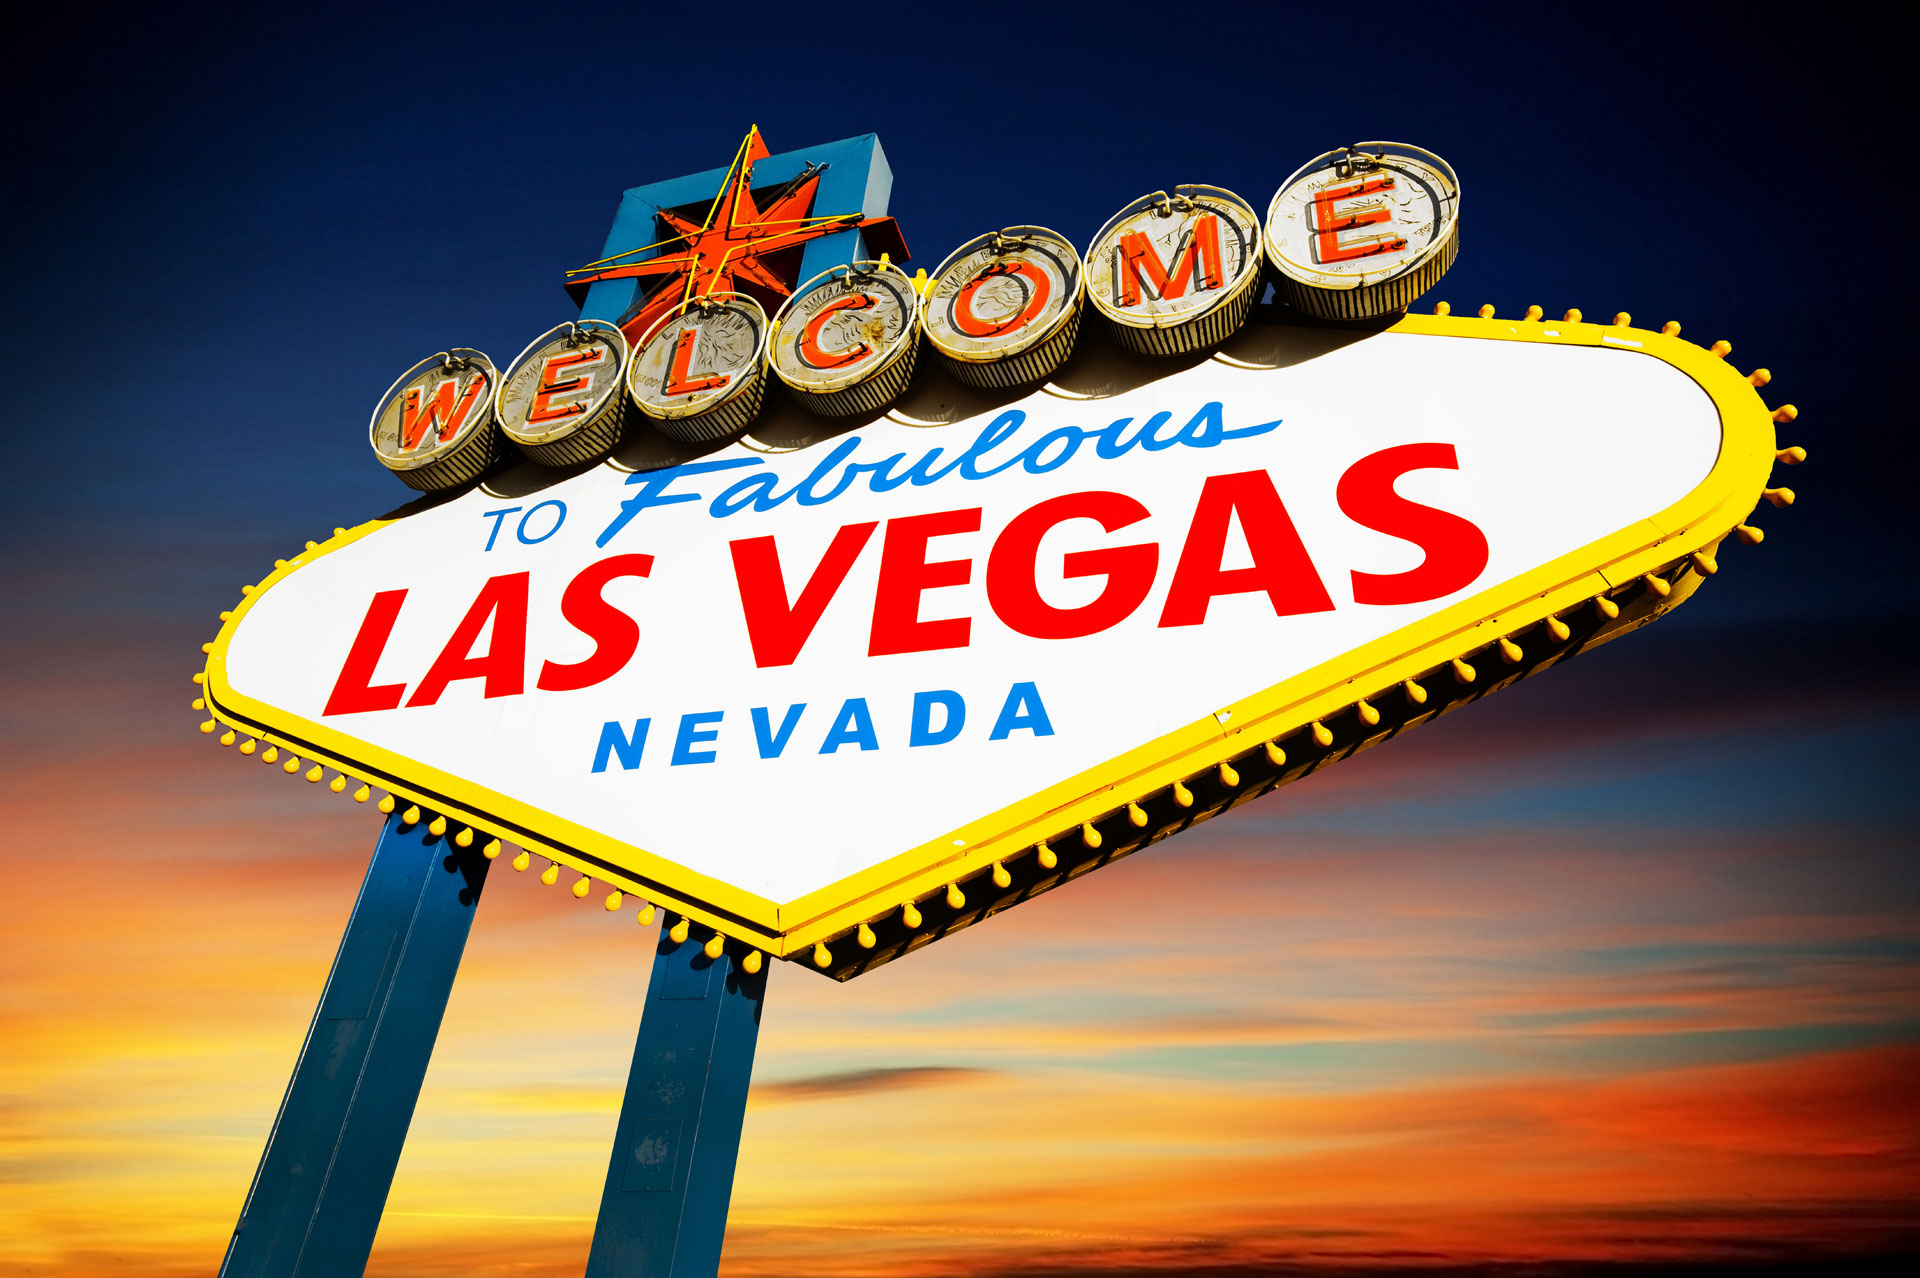 Las Vegas sign, USA